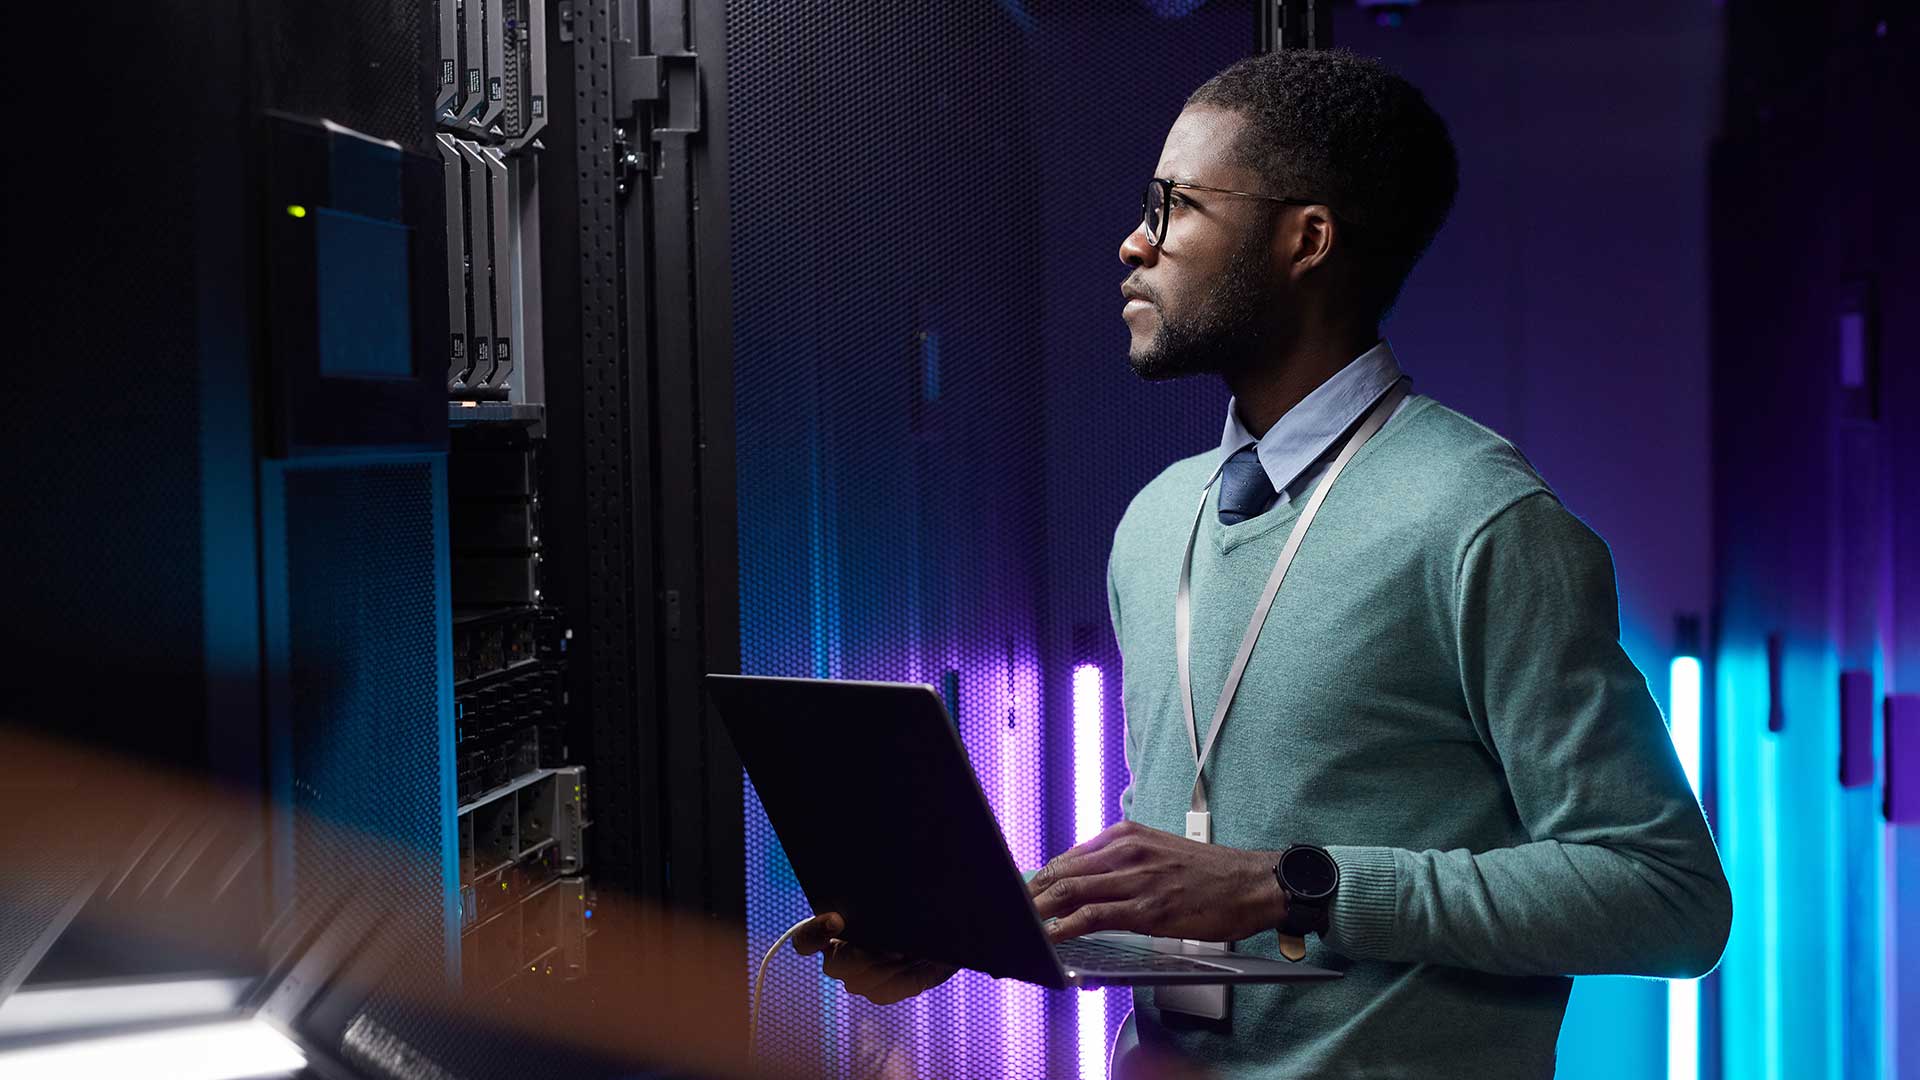 cloud computer engineer checks security on servers